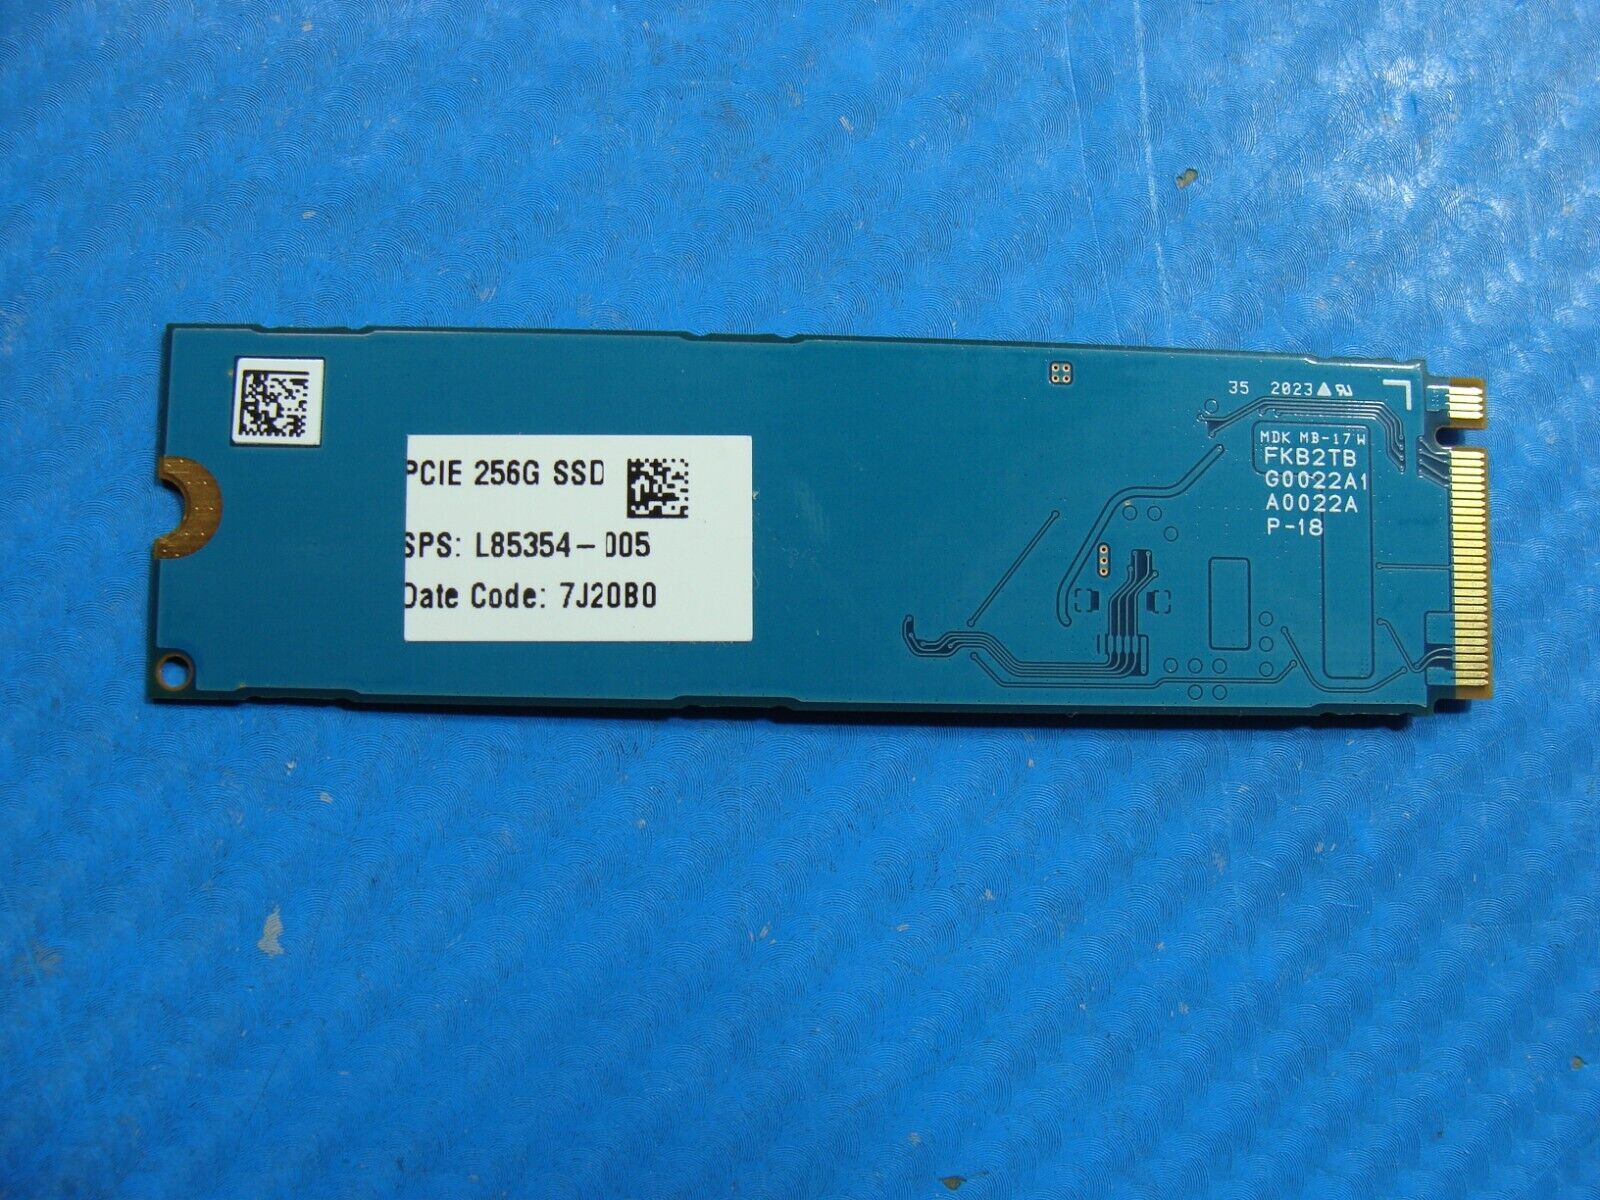 HP 15m-eu0013dx KIOXIA 256GB NVMe M.2 SSD Solid State Drive KBG40ZNV256G